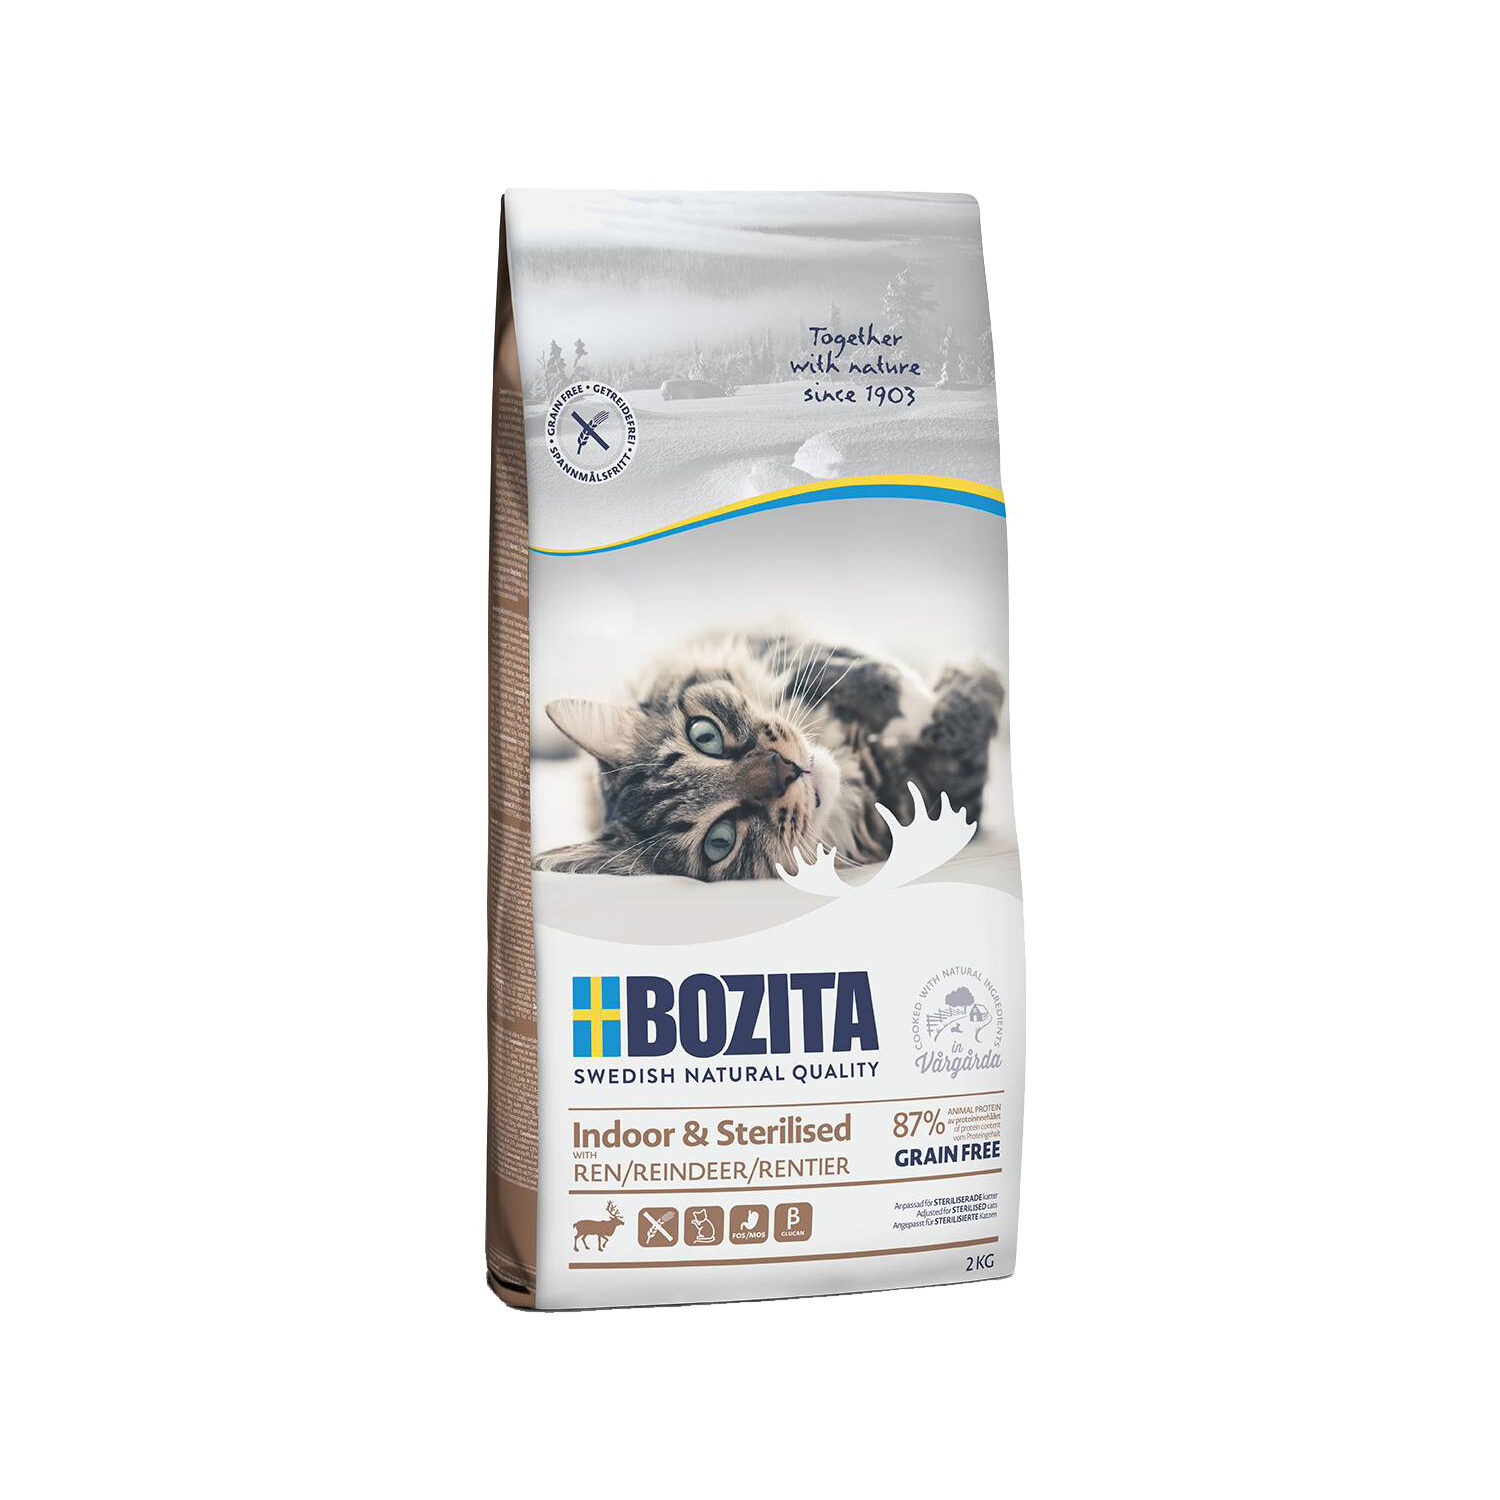 Bozita Indoor & Sterilised Grain Free - 10 kg - Rentier von Bozita